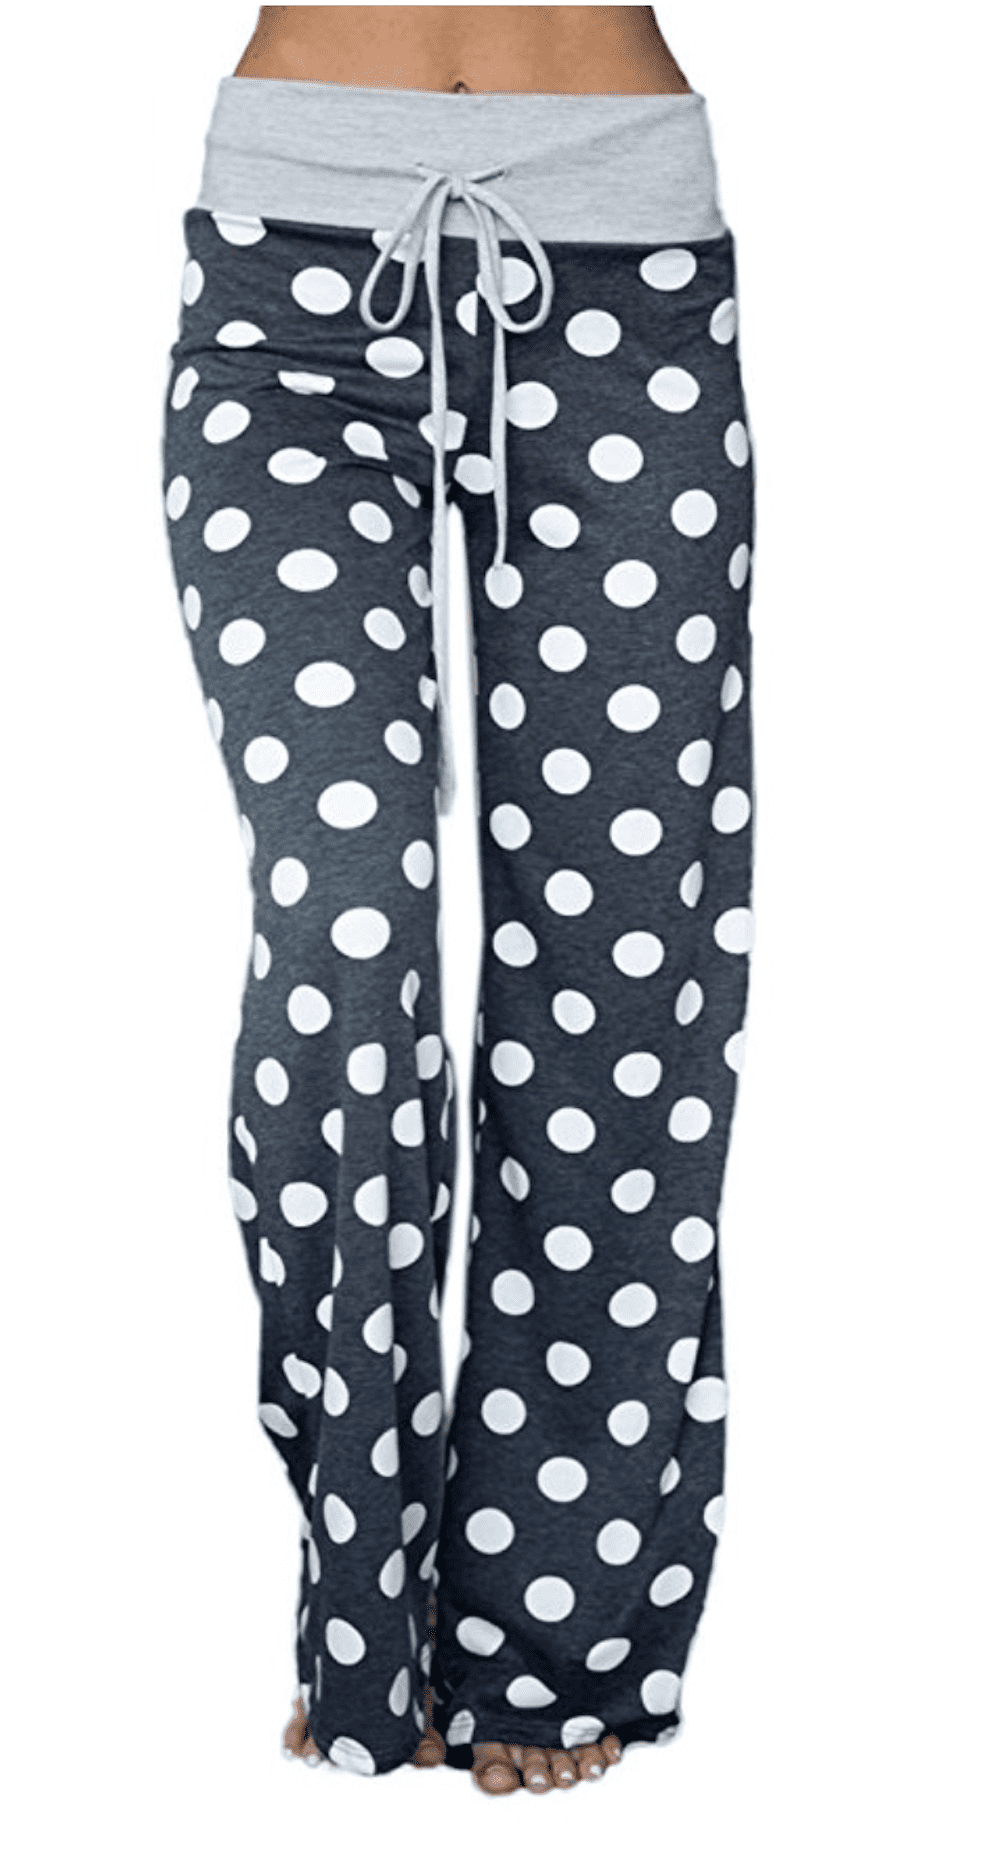 Lilly Posh Polka Dot and Striped pants Regular and Plus Sizes - Walmart.com